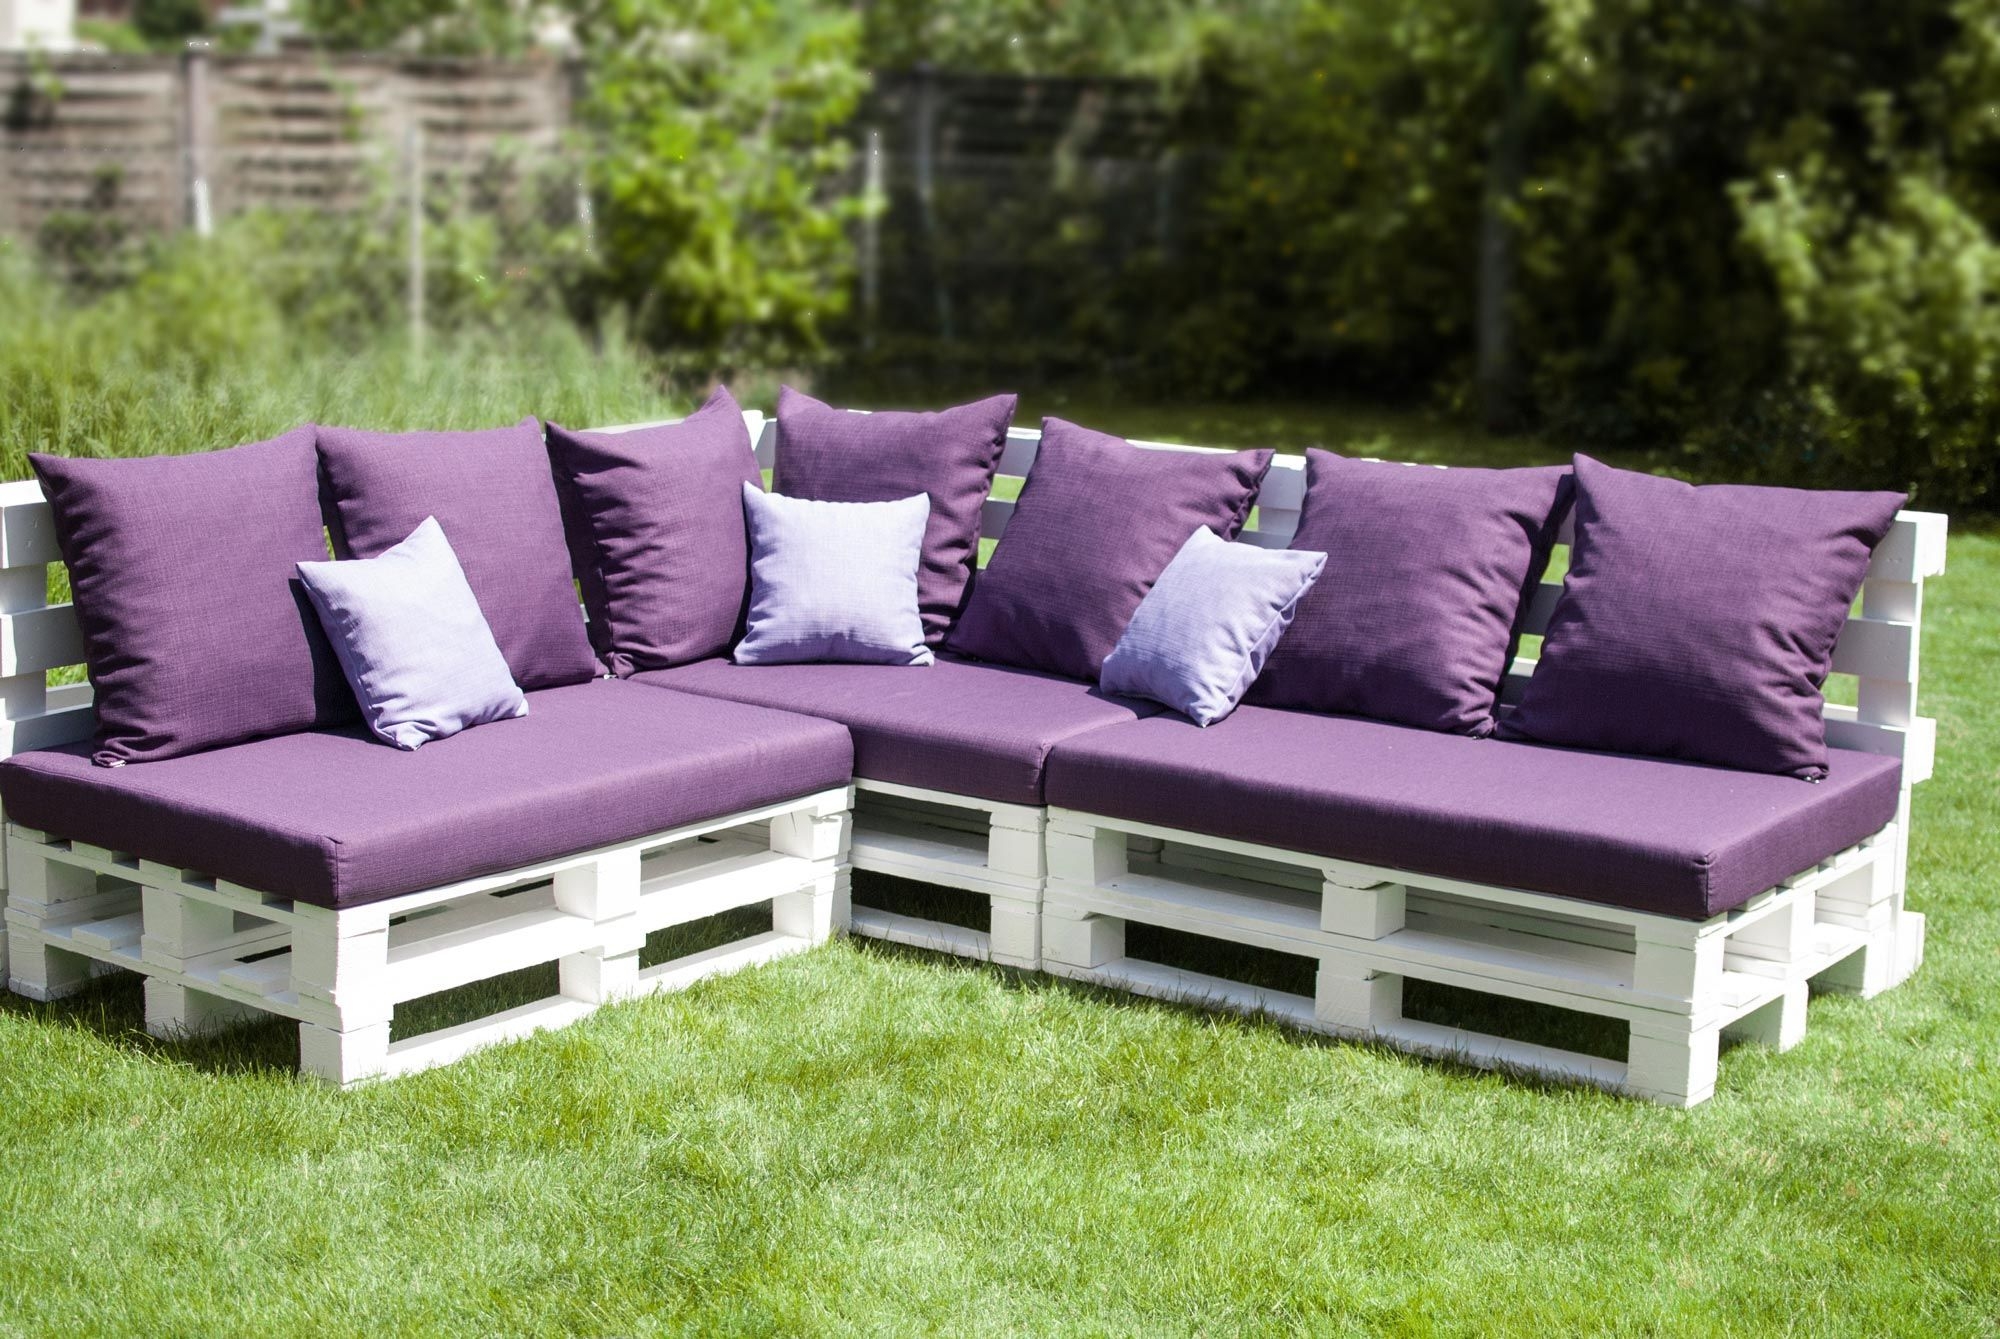 Lilac cushions